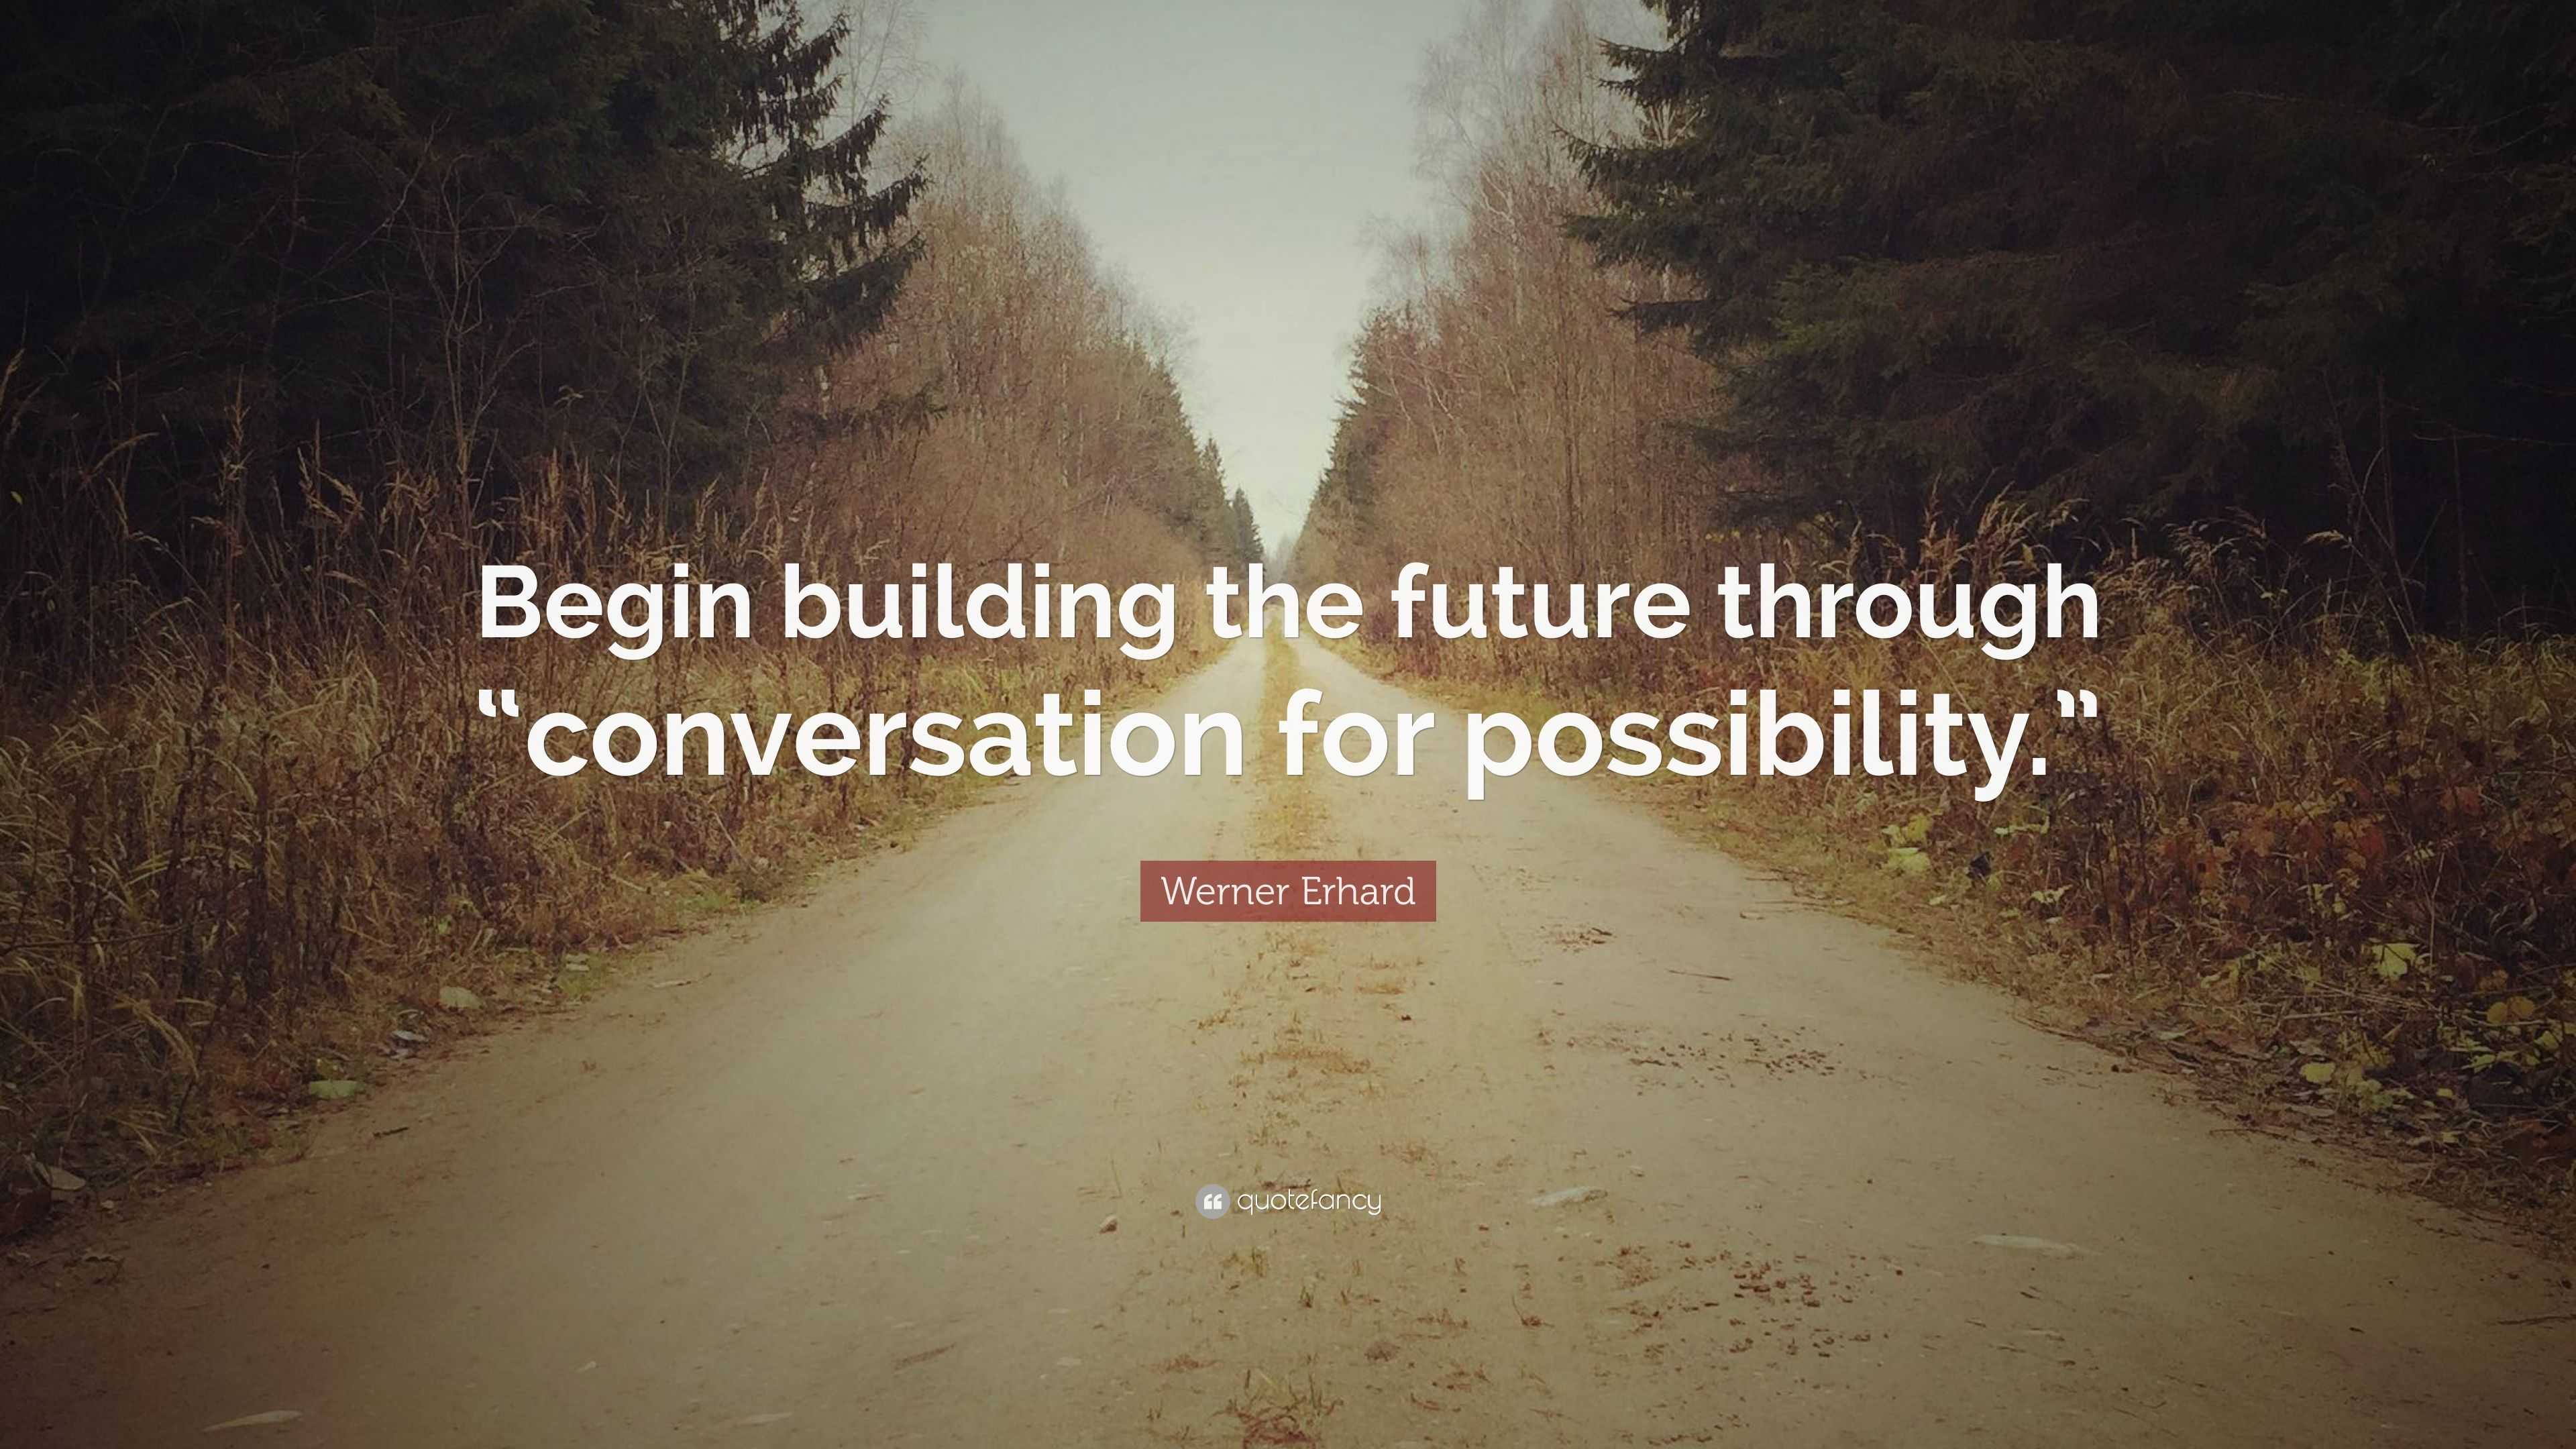 Werner Erhard Quote: “Begin building the future through “conversation ...